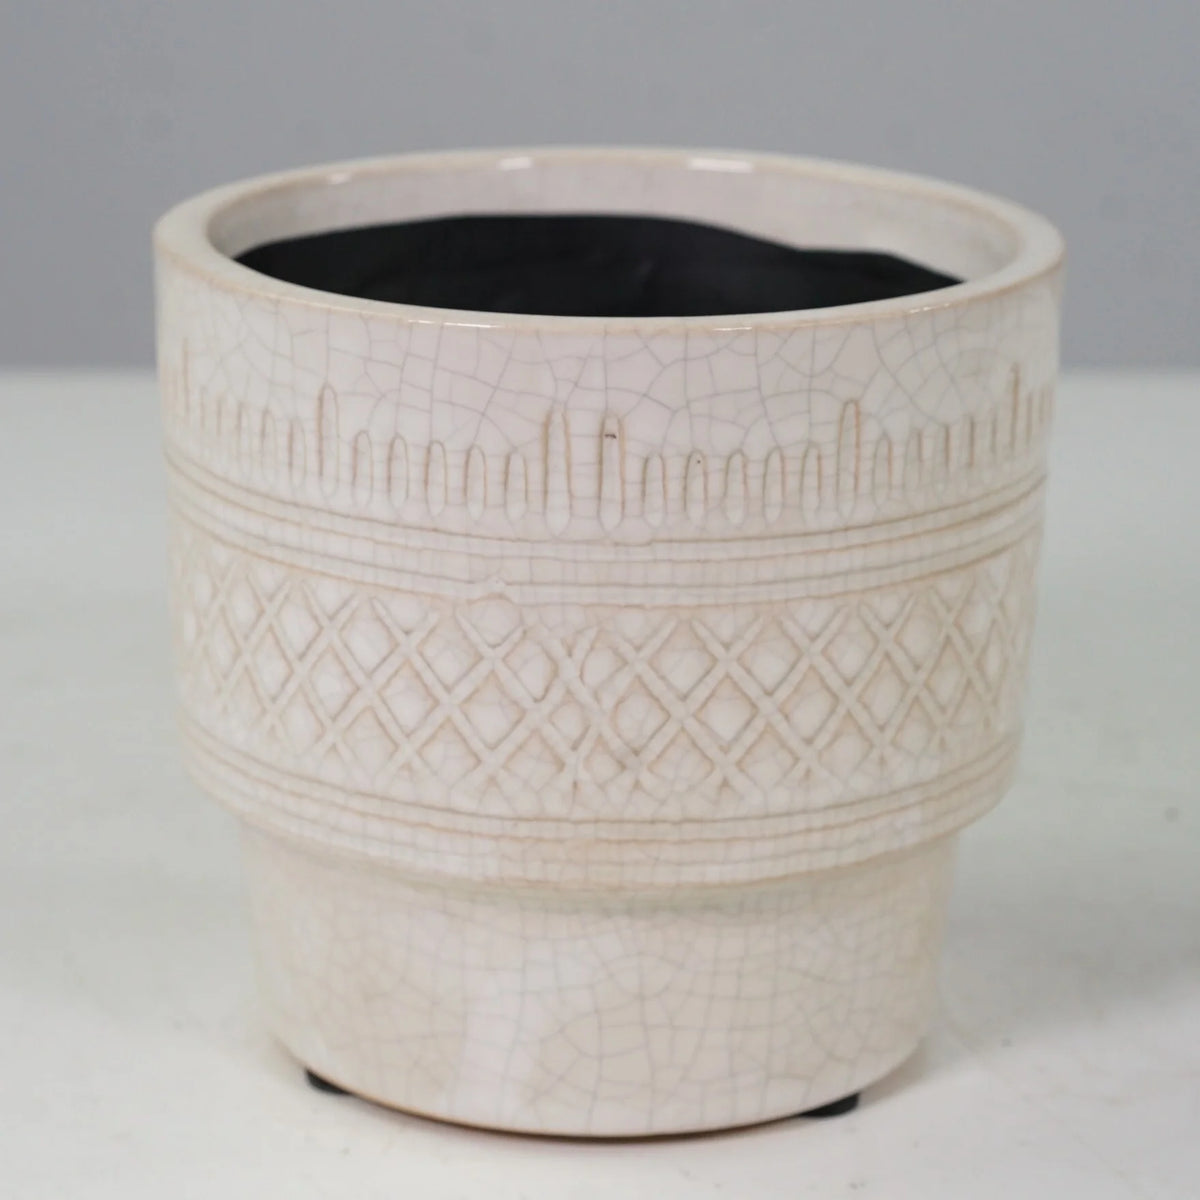 Pot blanc avec design - CE00-181  4.9"Dx4.5"H WHITE GLAZED CERAMIC POT